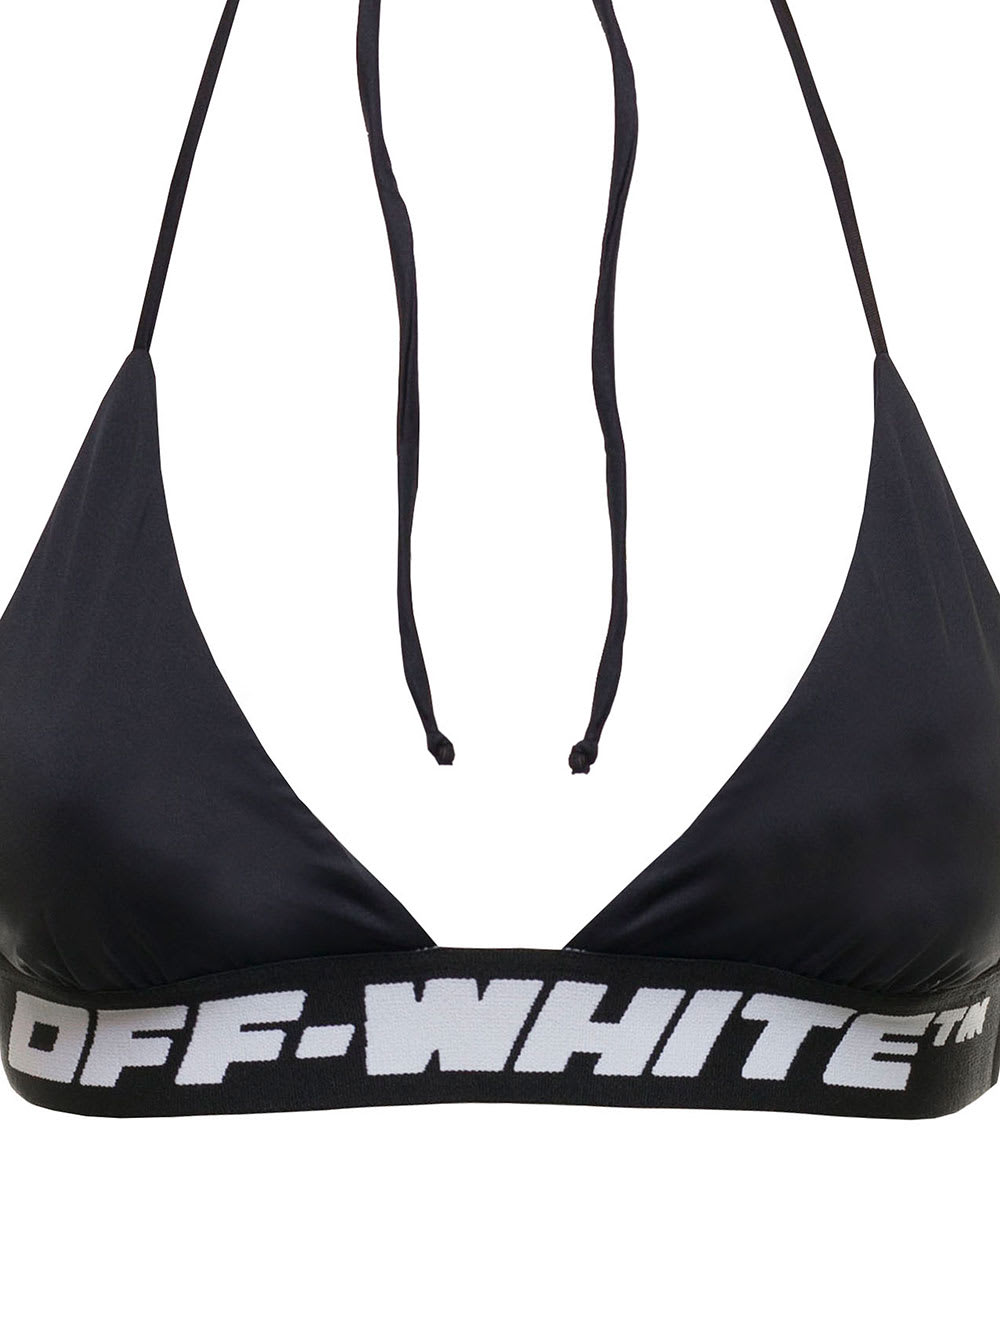 OFF-WHITE OFF WHITE WOMANS BLACK STRECH FABRIC BIKINI WITH LOGO 